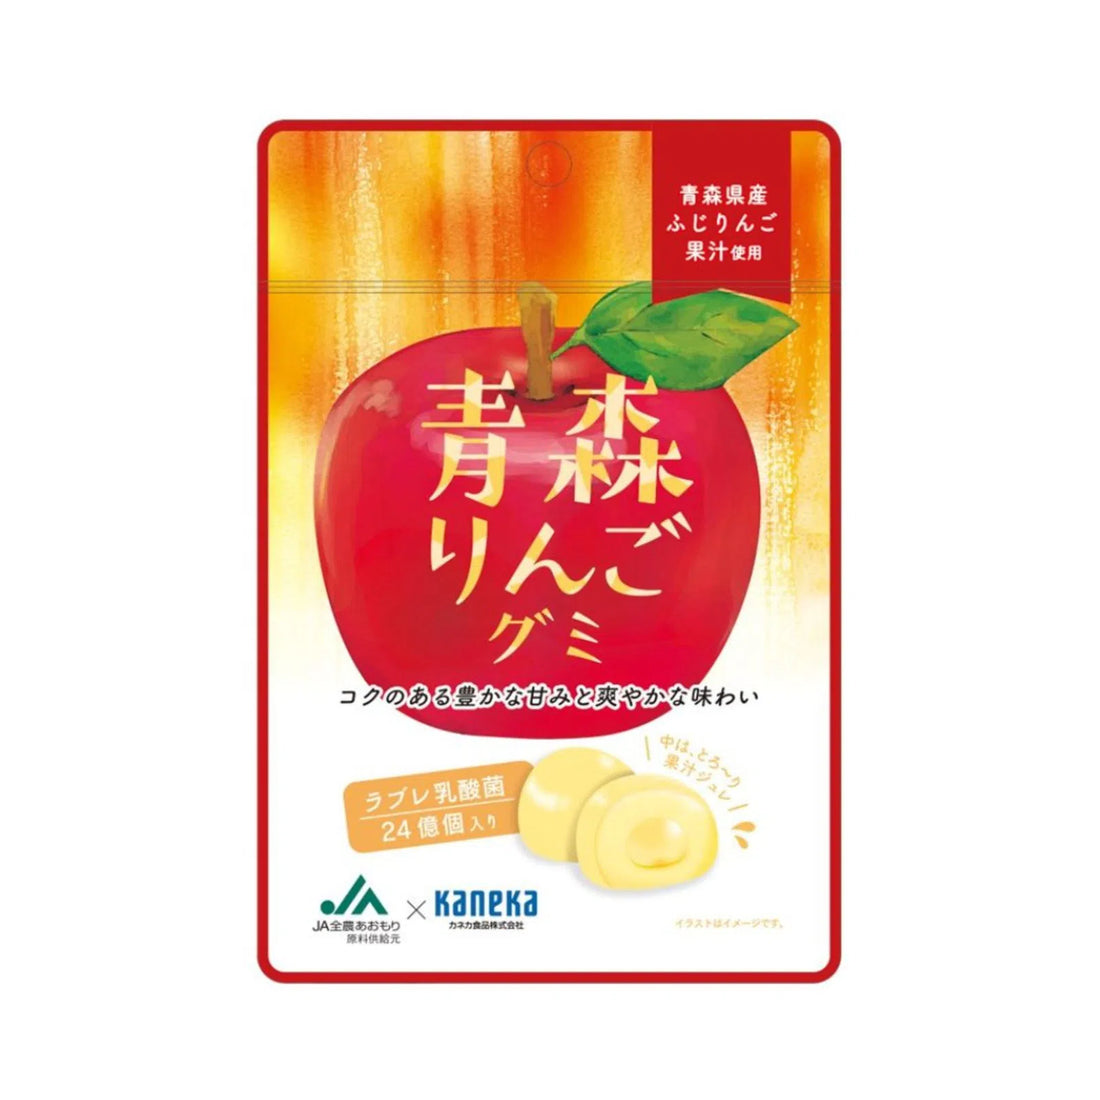 Kaneka Aomori Fuji Apple Gummy pack of 10 (Japan)